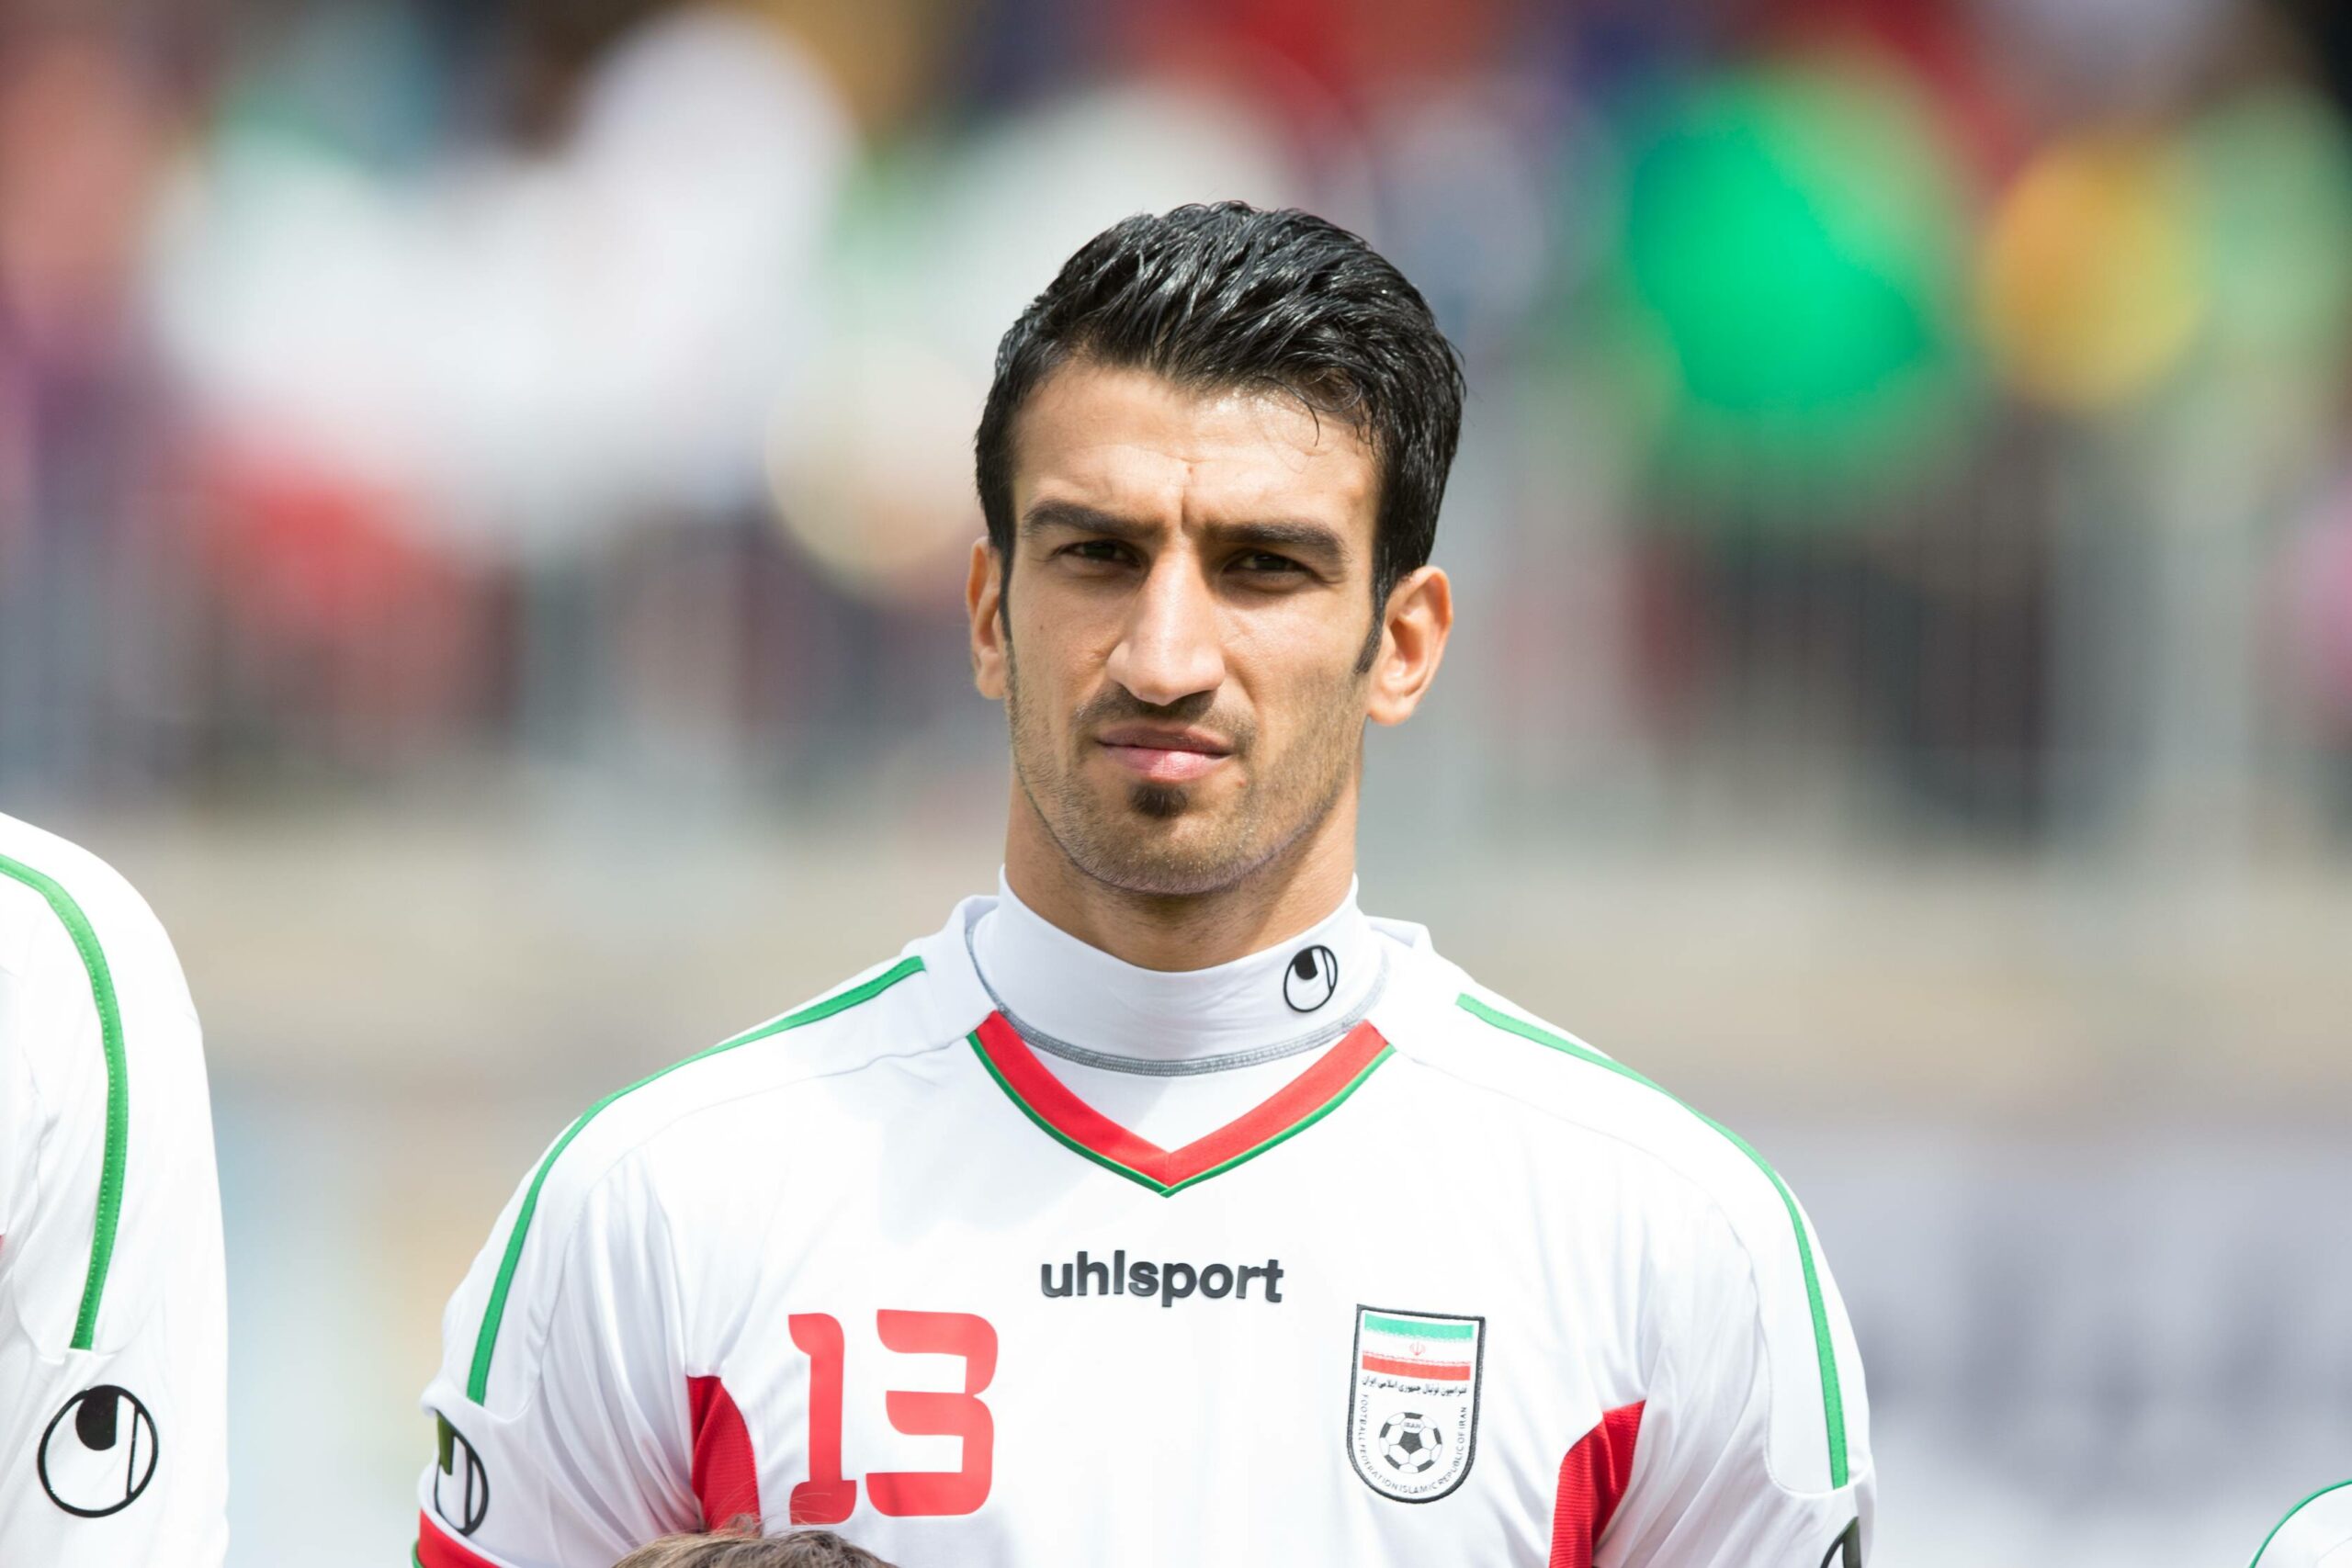 Hossein Mahani